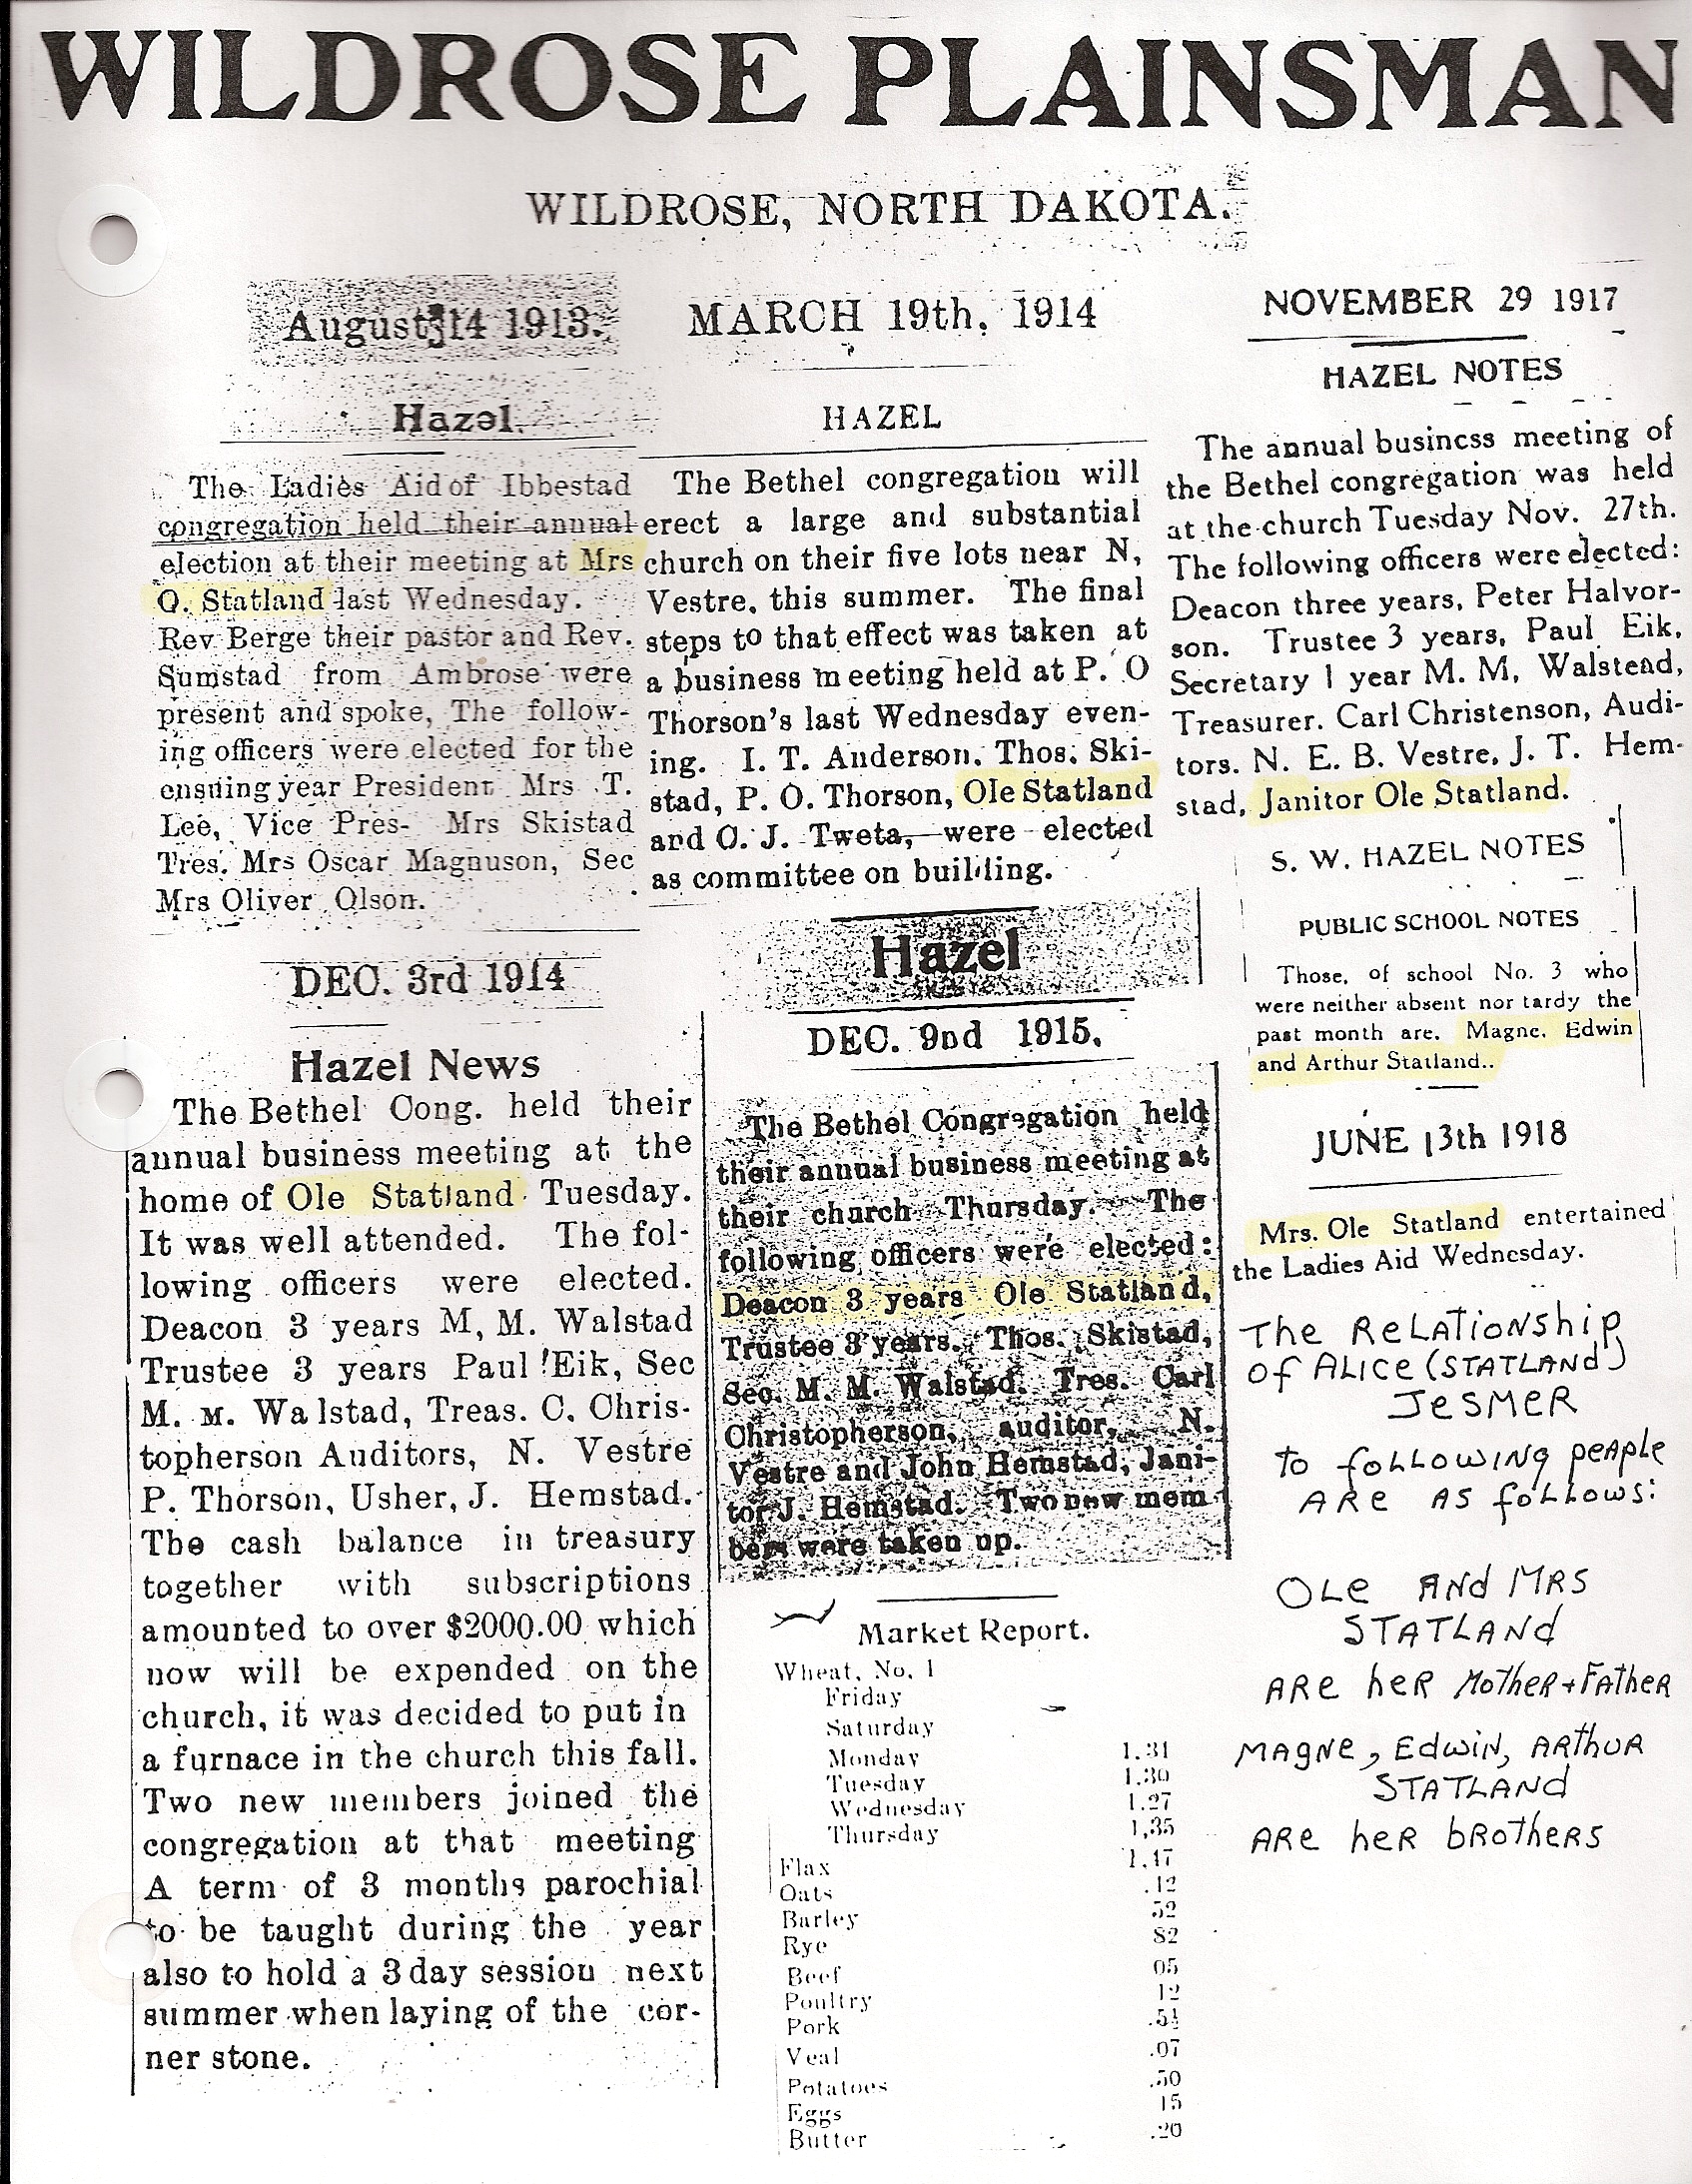 Wildrose plainsman sheet 1913-18